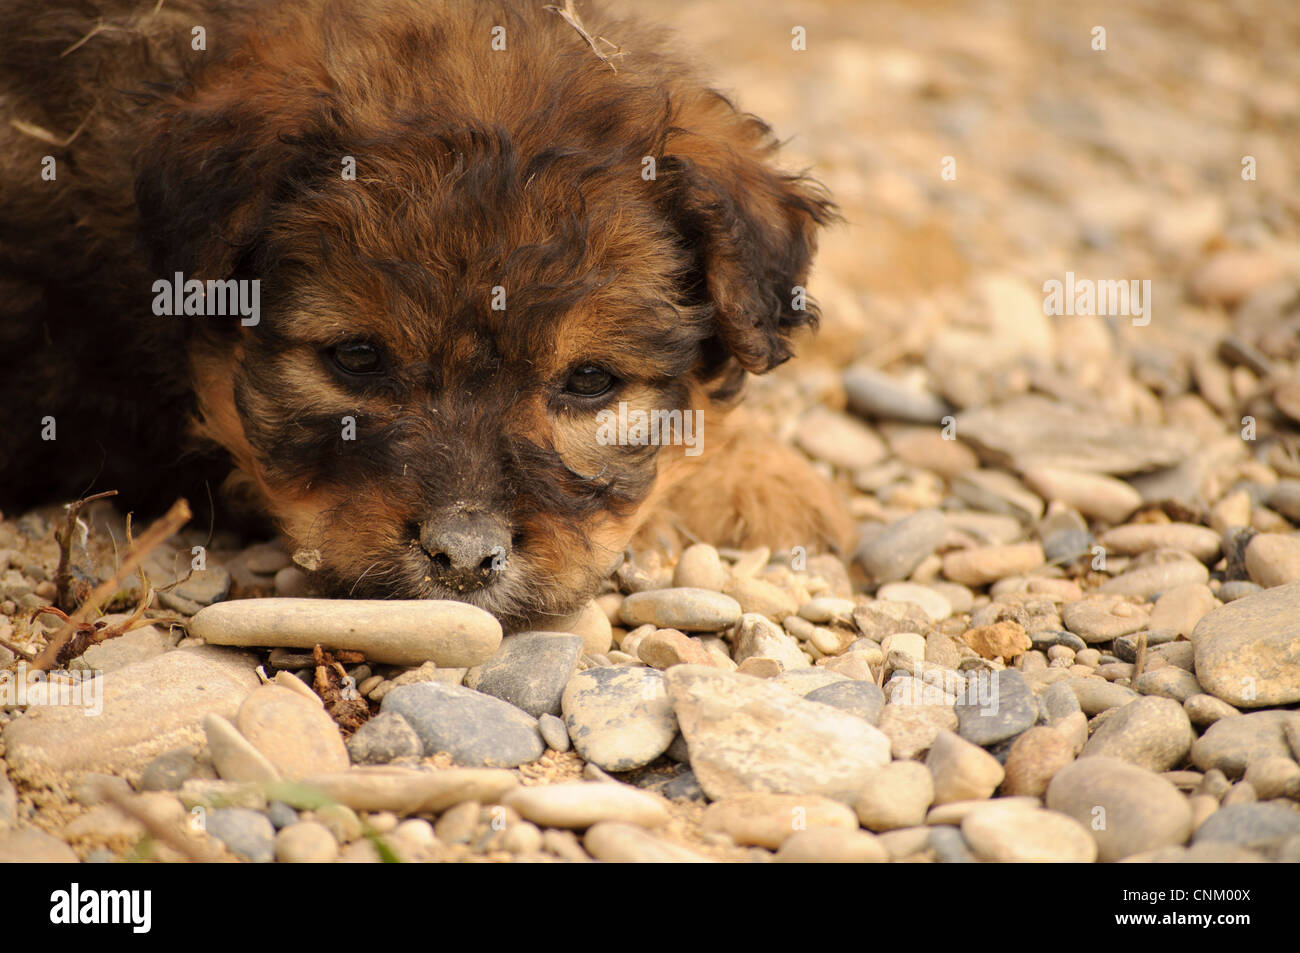 Adorable puppy Stock Photo